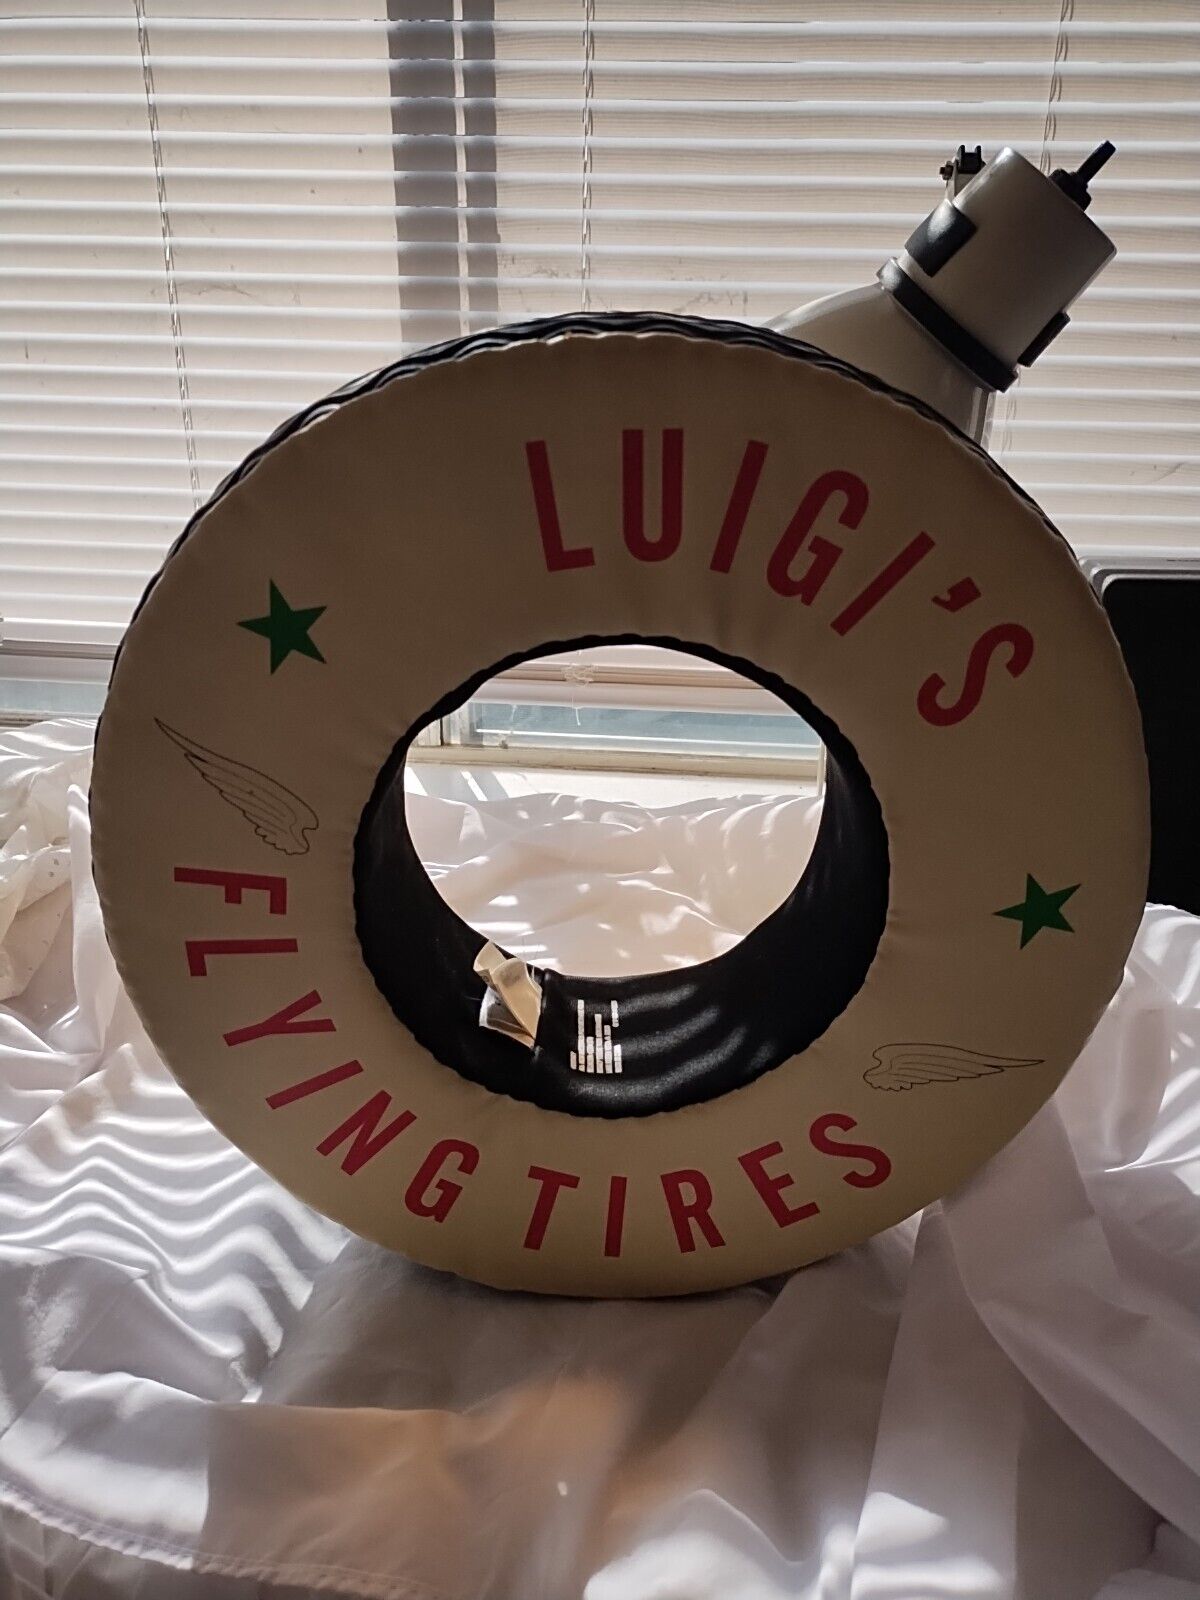 LUIGI LUIGS'S LUIGIS FLYING TIRE HAT DISNEY PIXAR CARS LAND VINYL